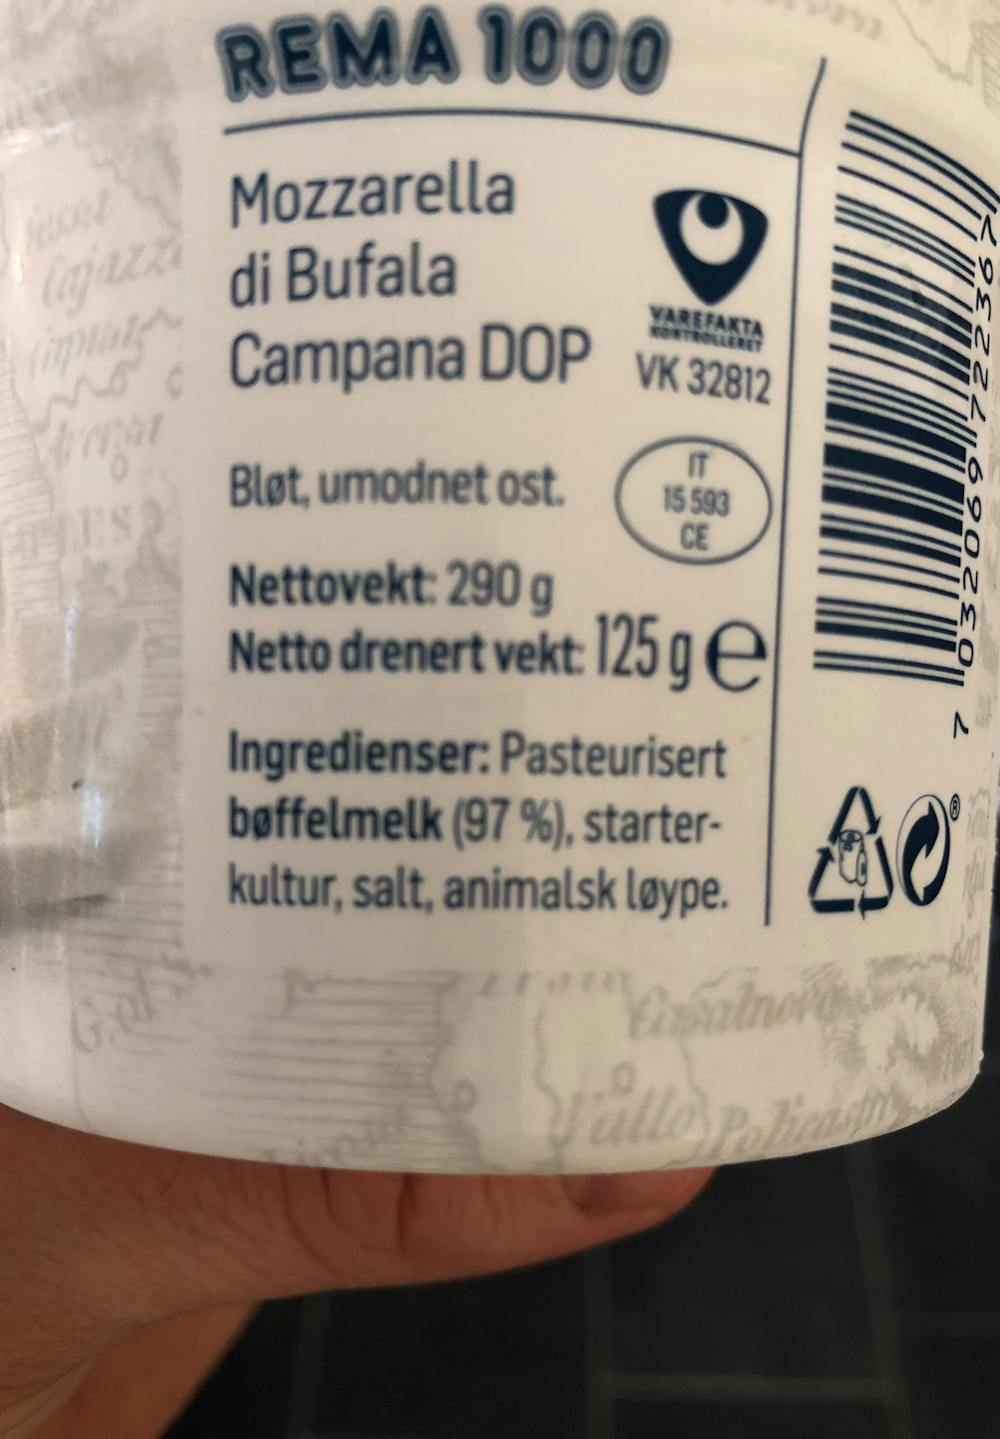 Ingredienslisten til Mozzarella di Bufala Campana DOP, Rema 1000